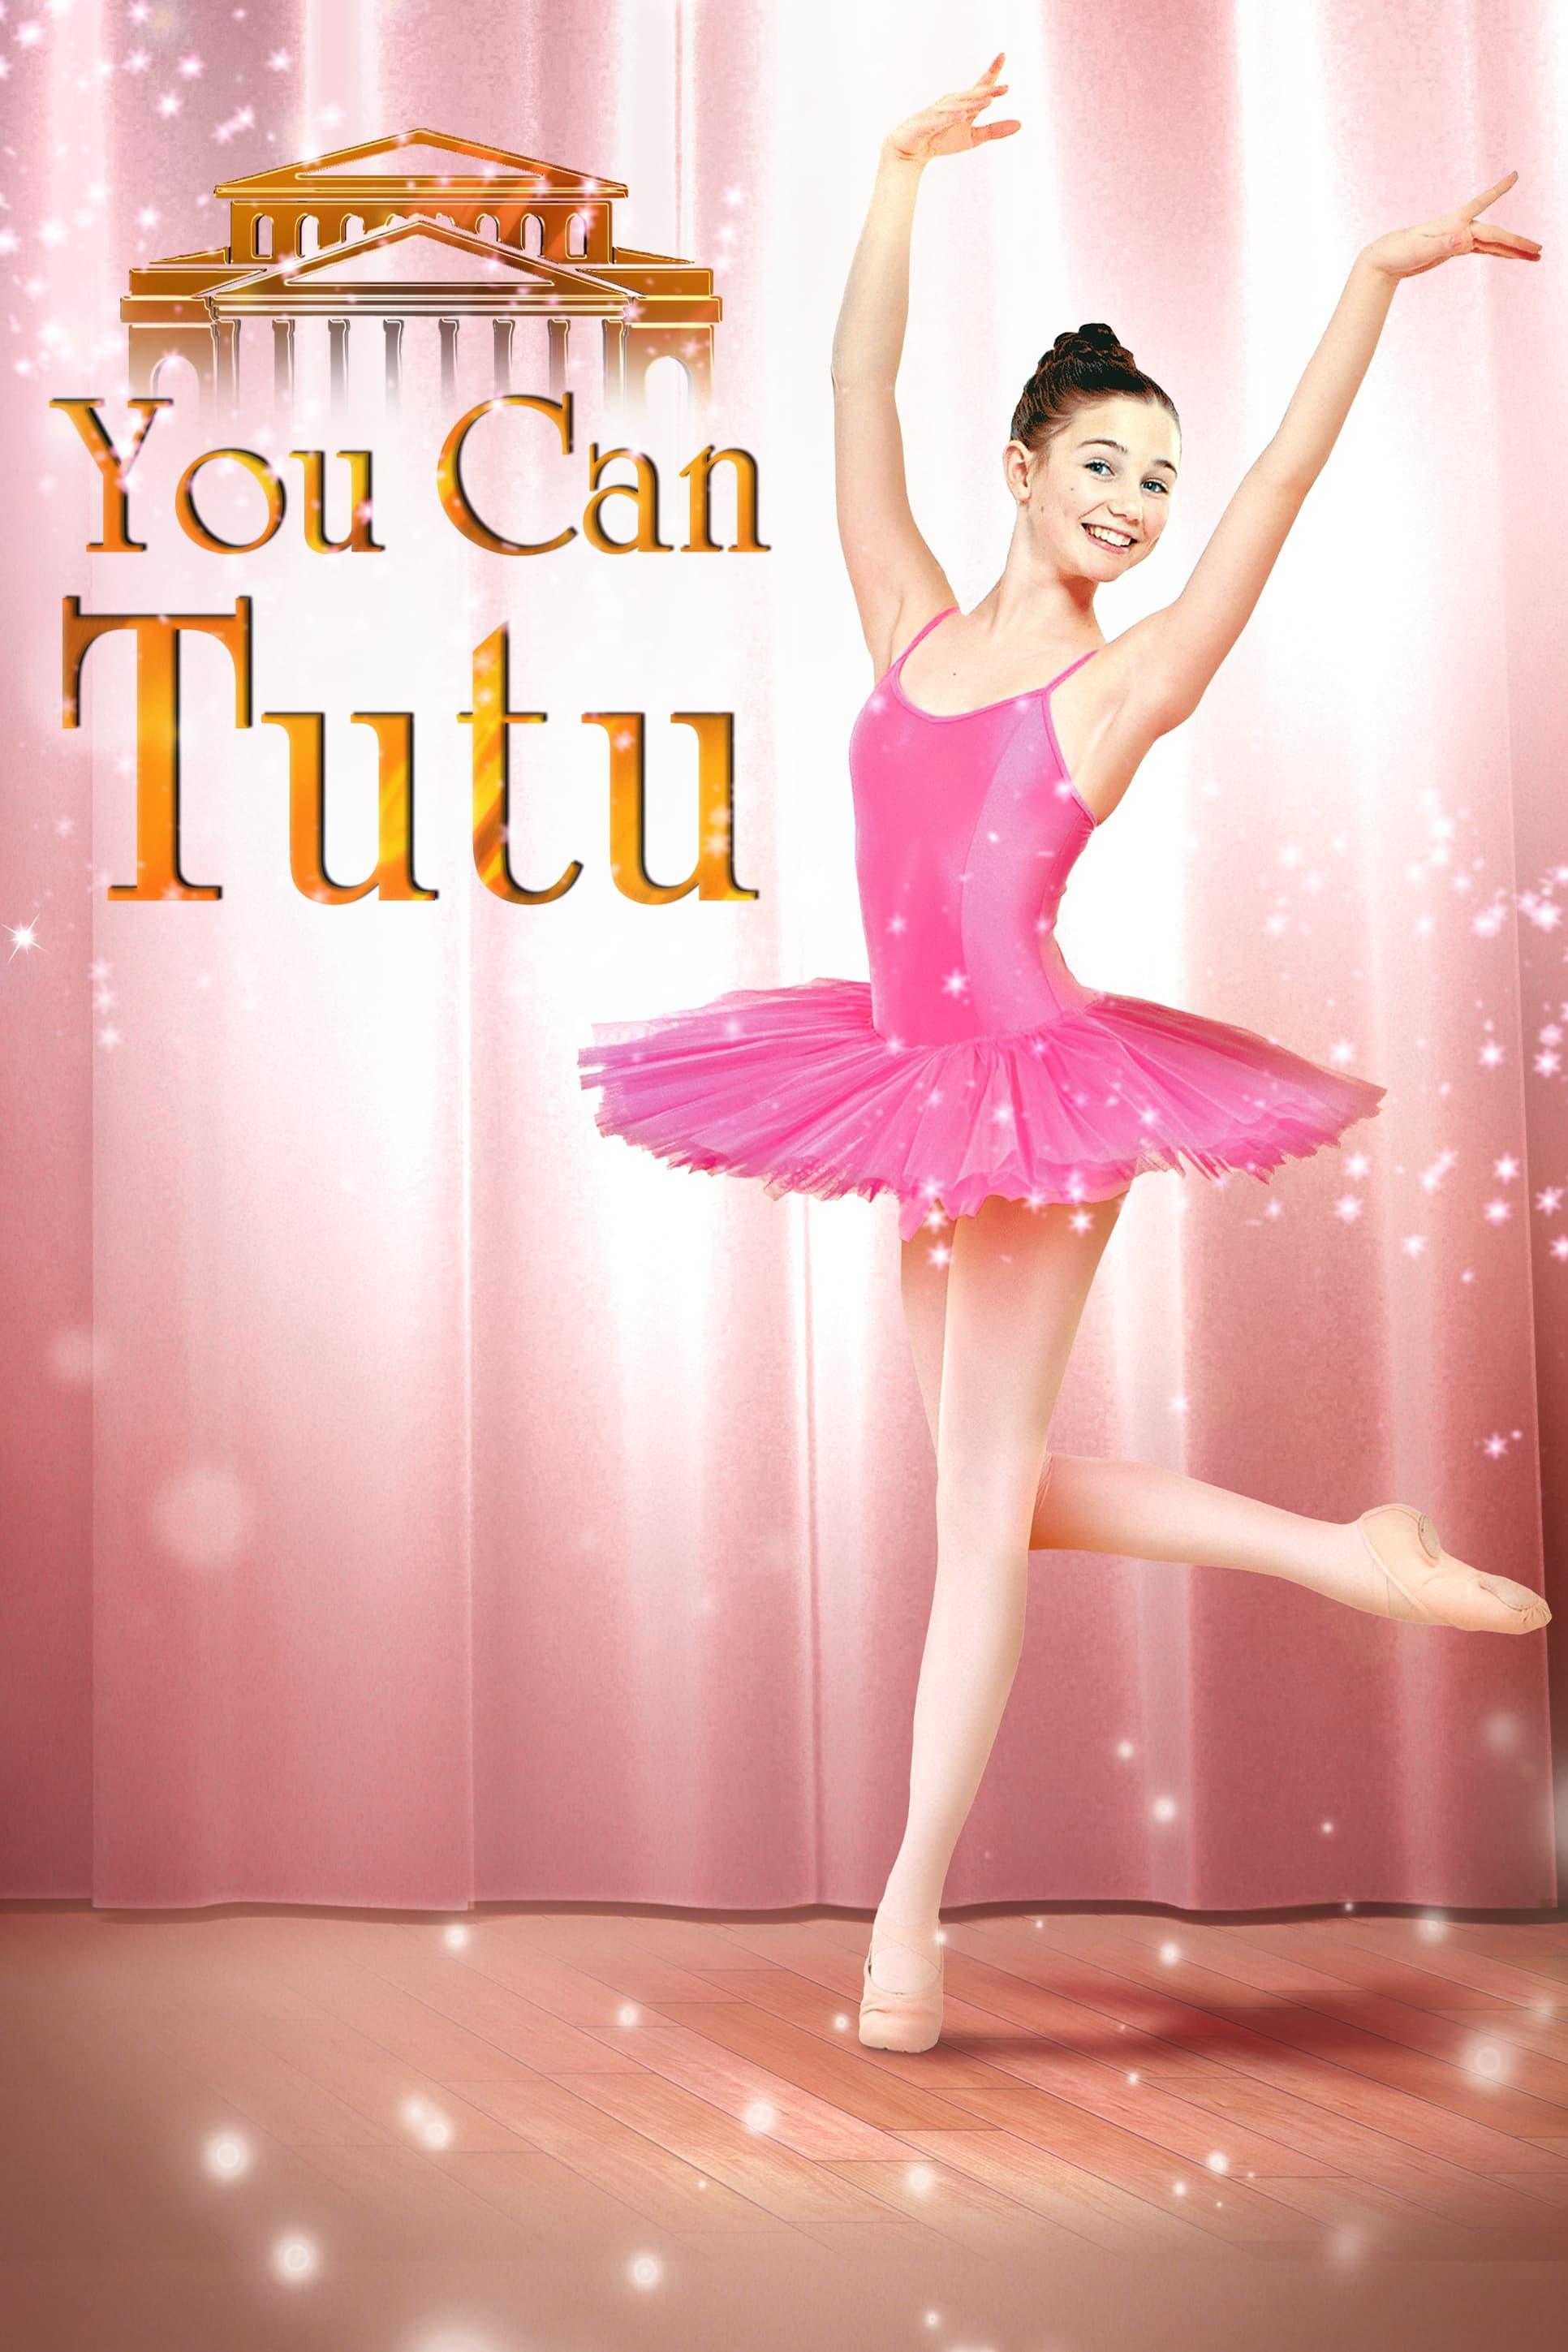 You Can Tutu poster